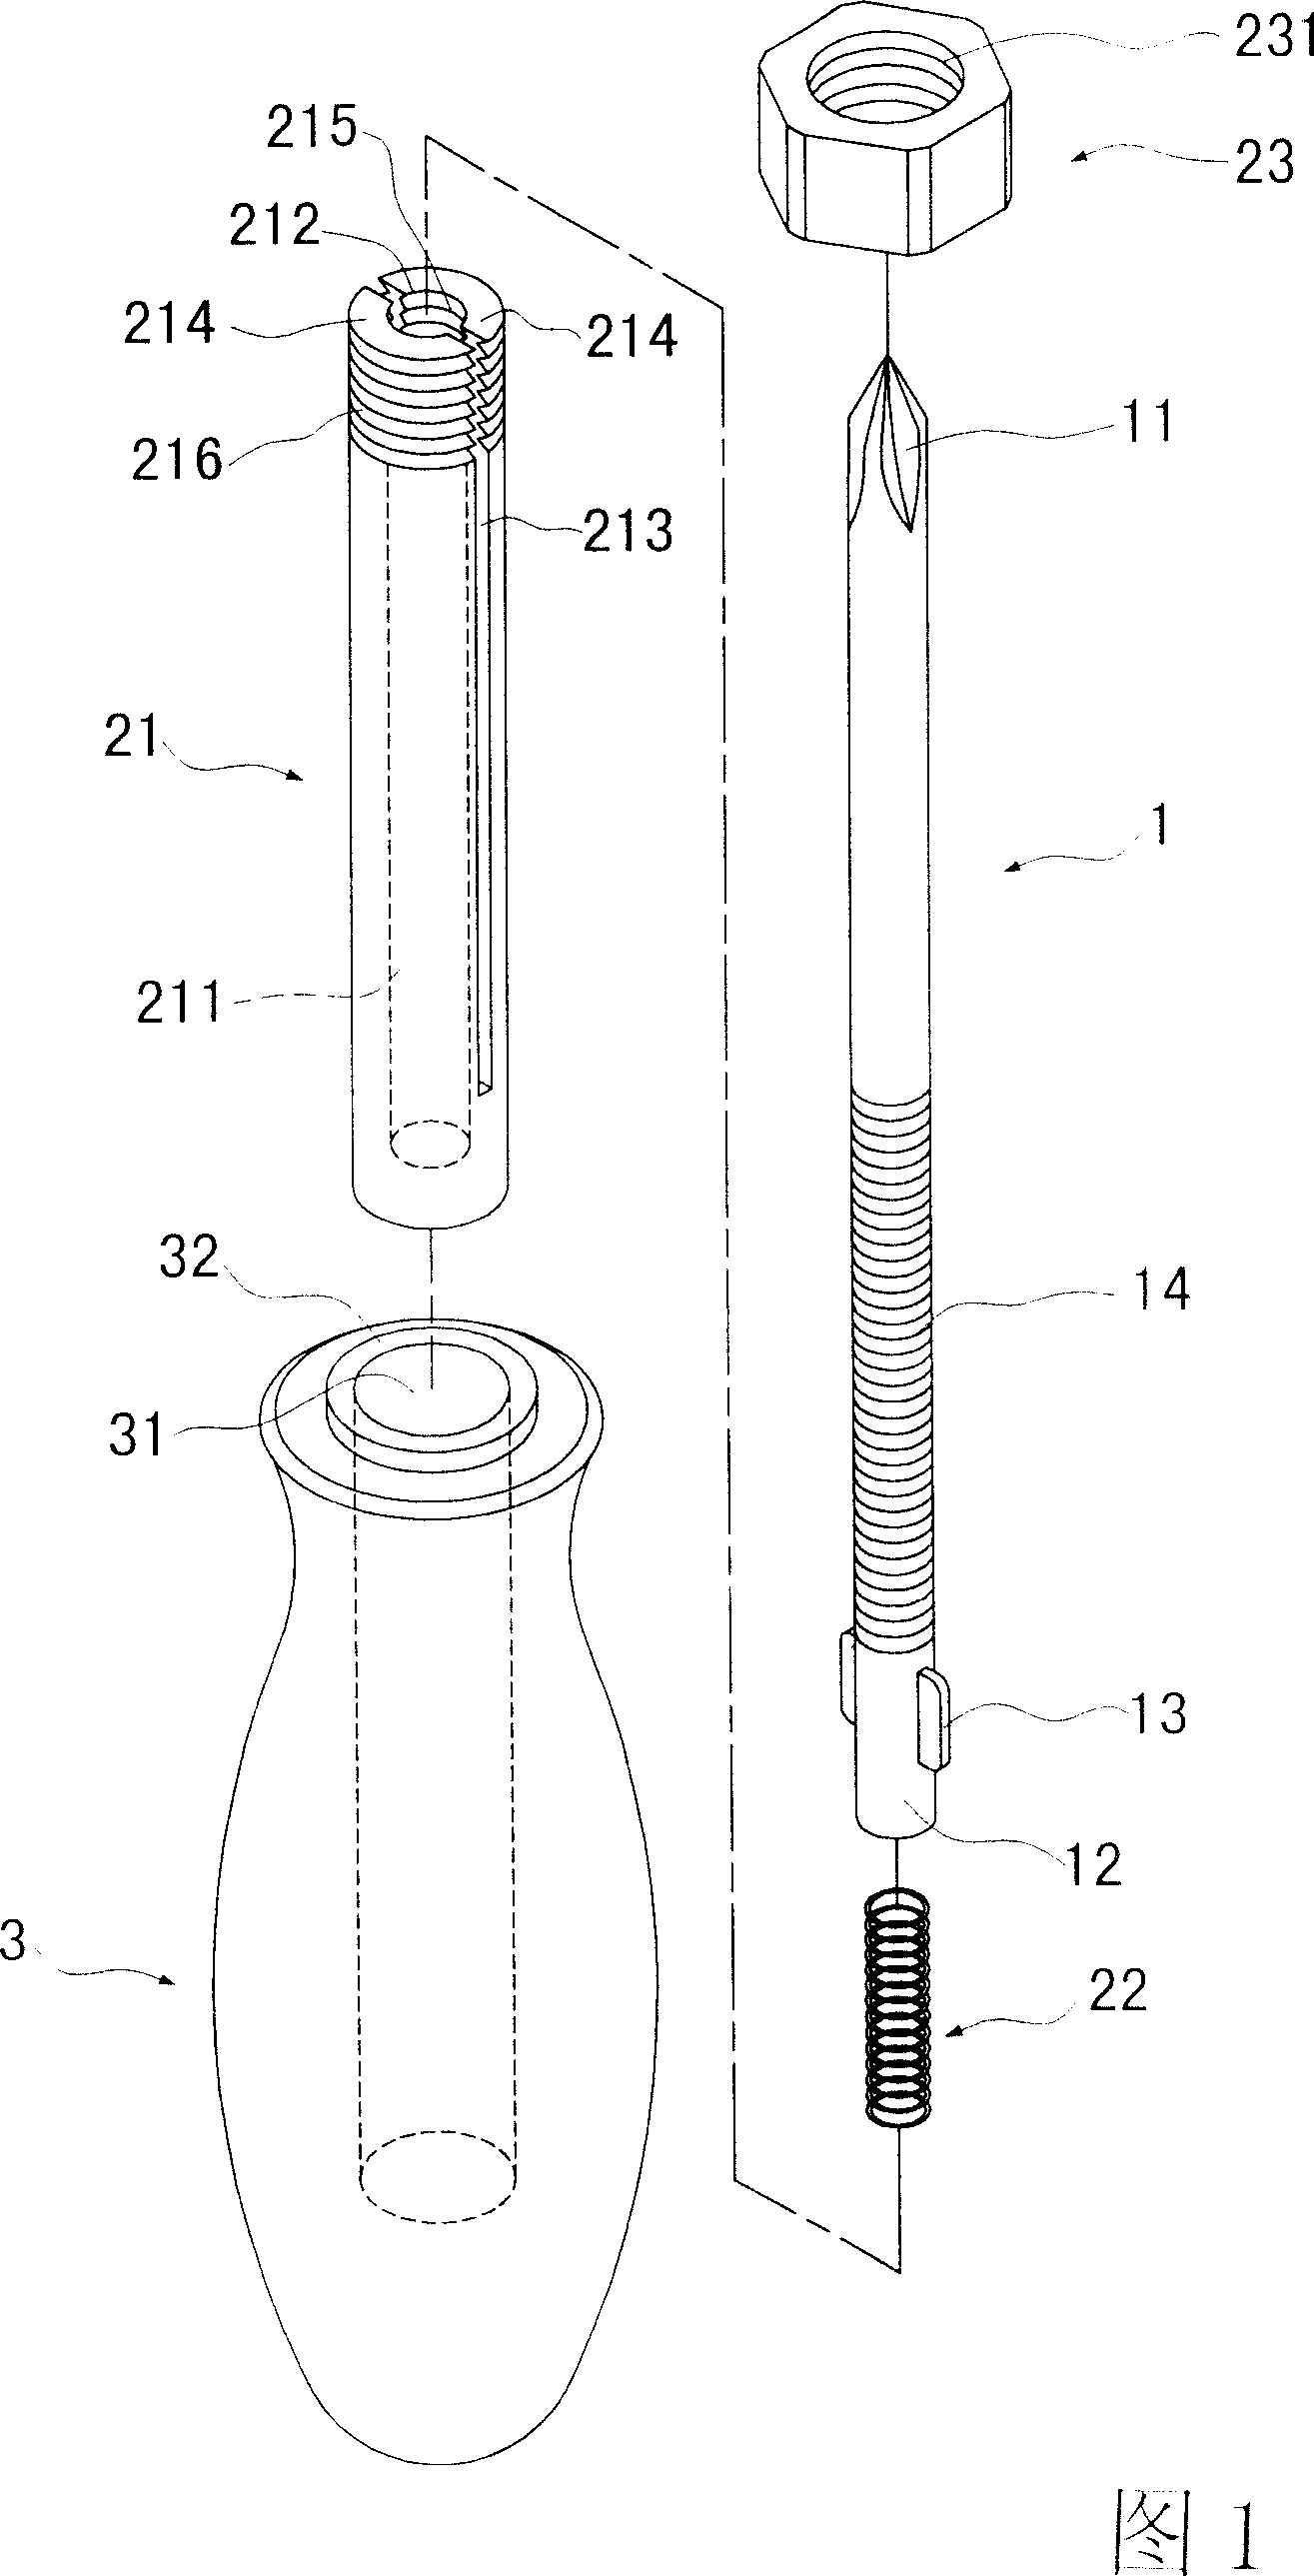 Adjustable screwdriver structure